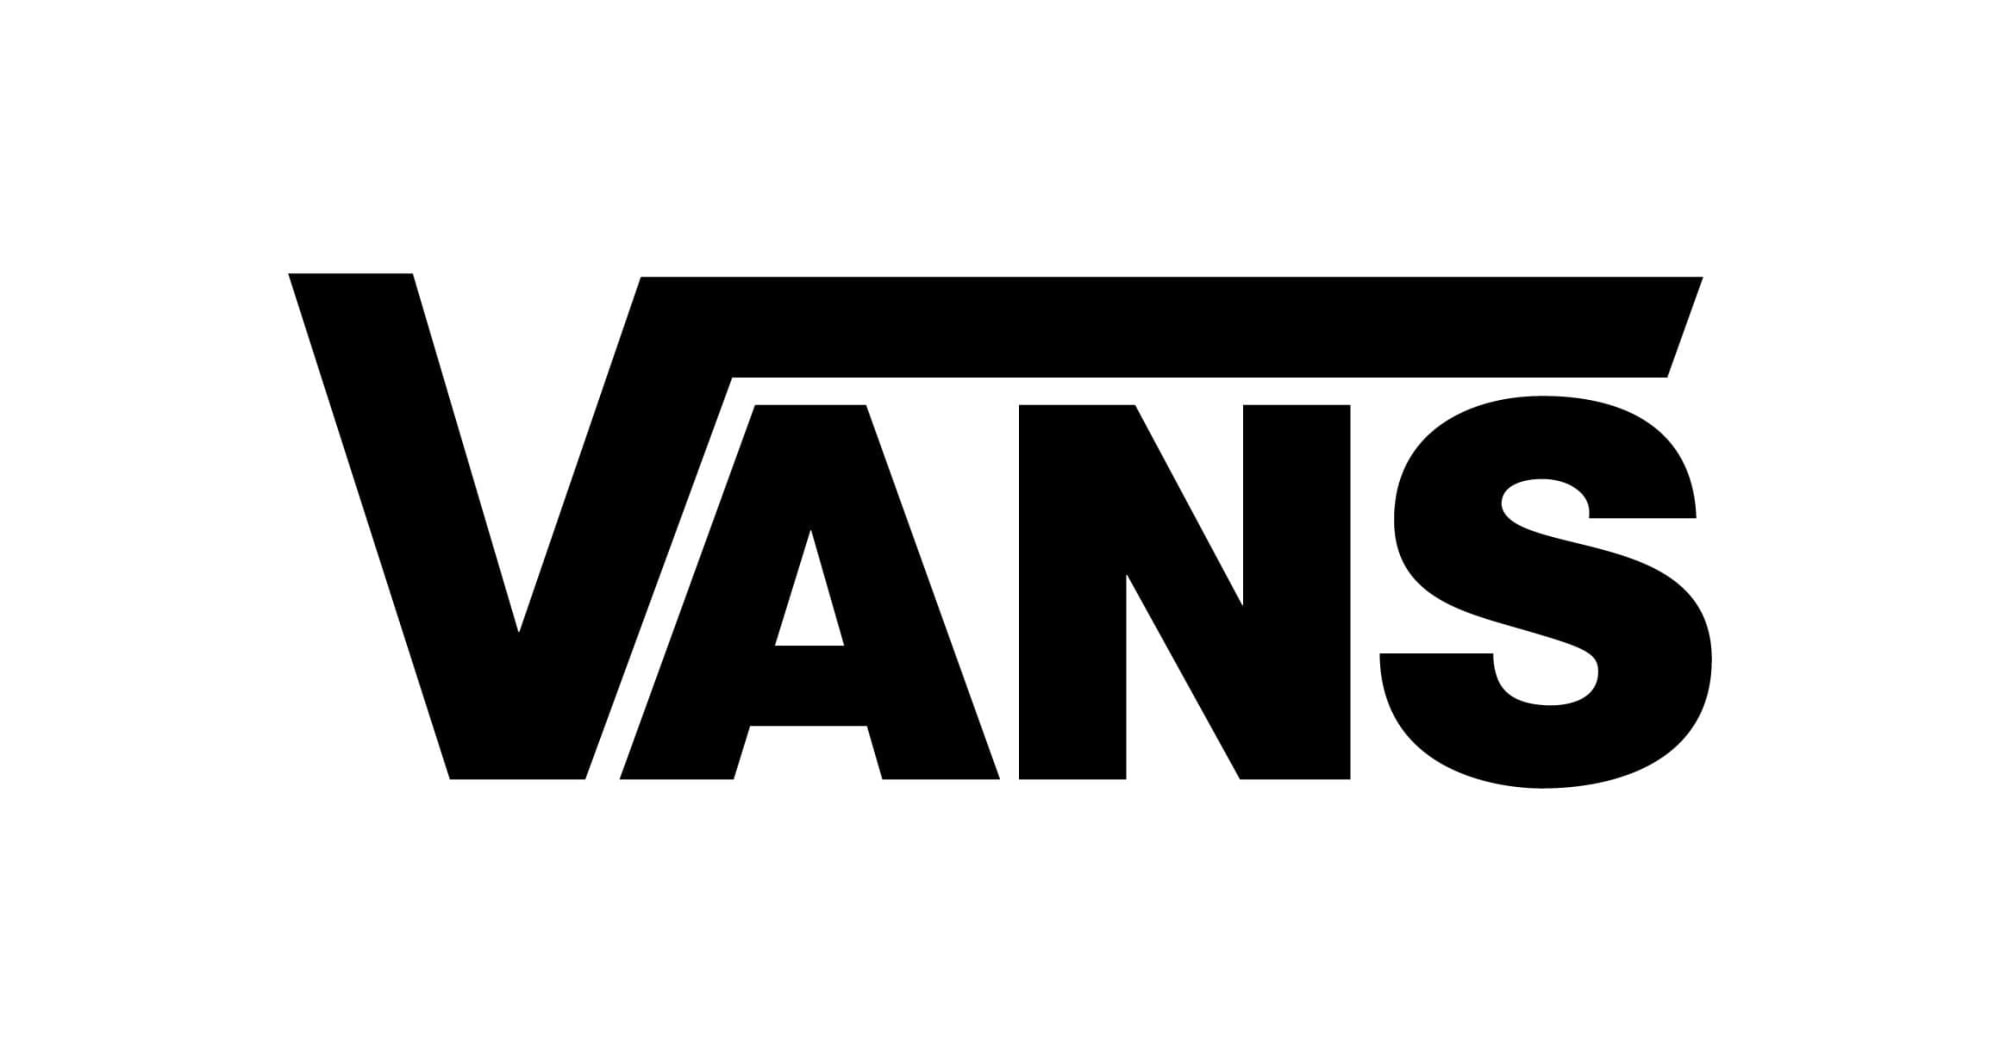 Vans brand logo